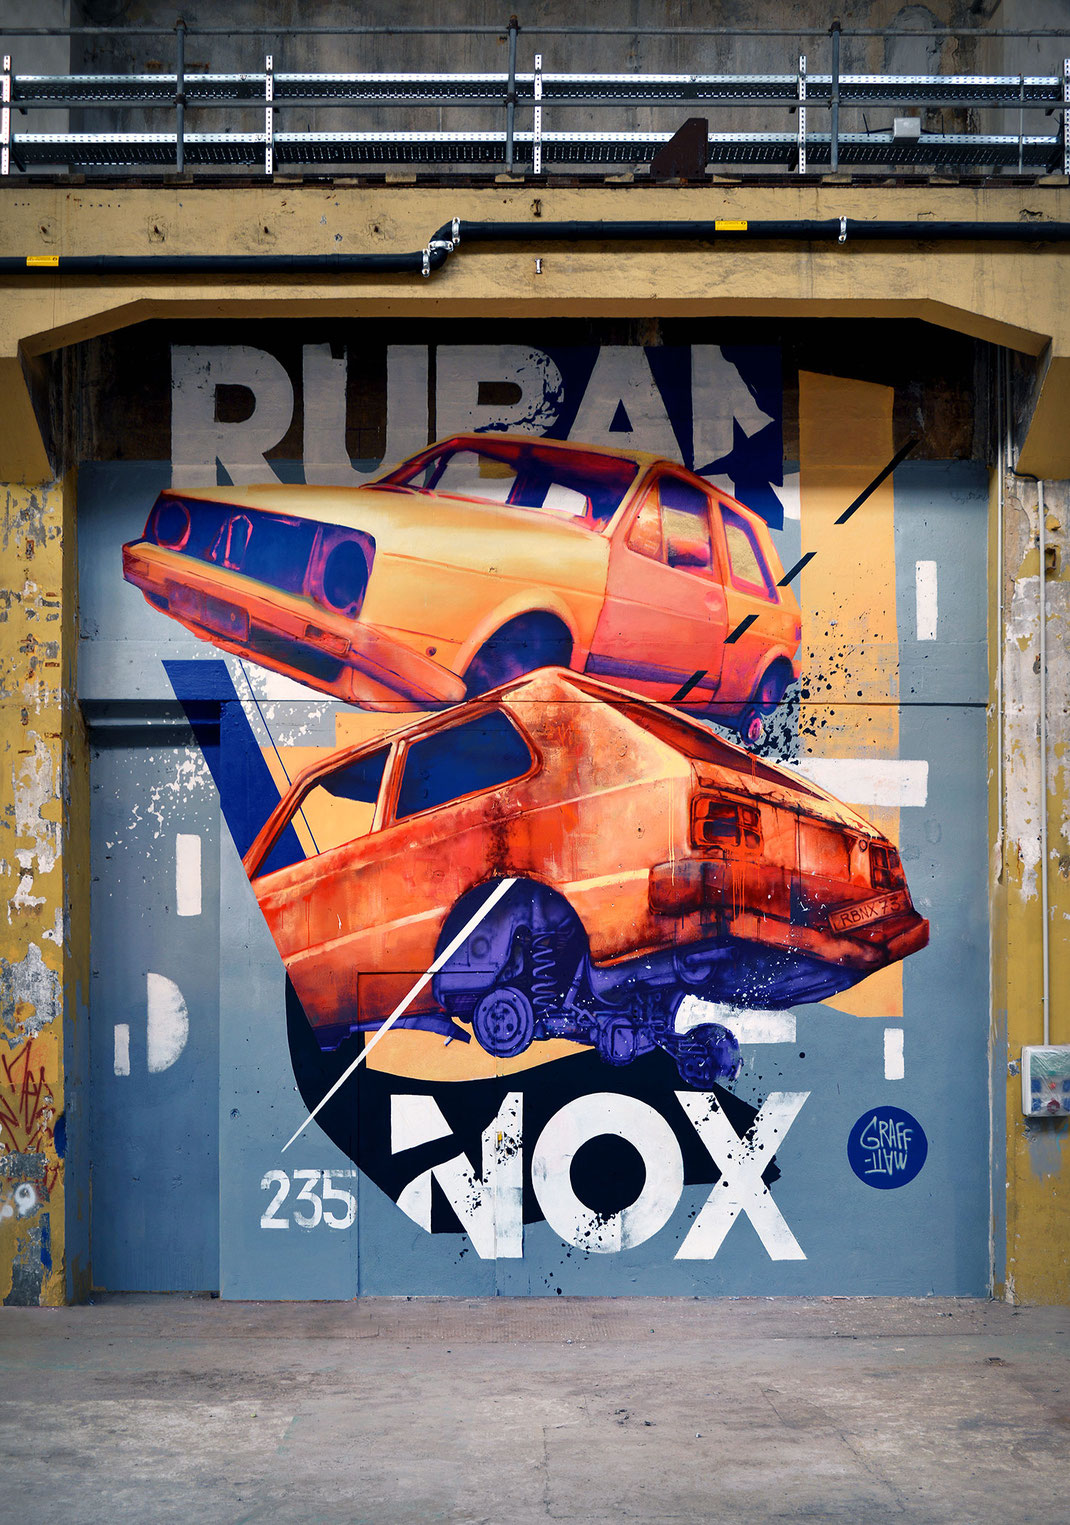 RUBANOX fresque industrielle chambéry usine streetart graffmatt artiste peintre urbain contemporain graffiti art mural déco intérieure peinture murale voiture abandonnée design cars painting